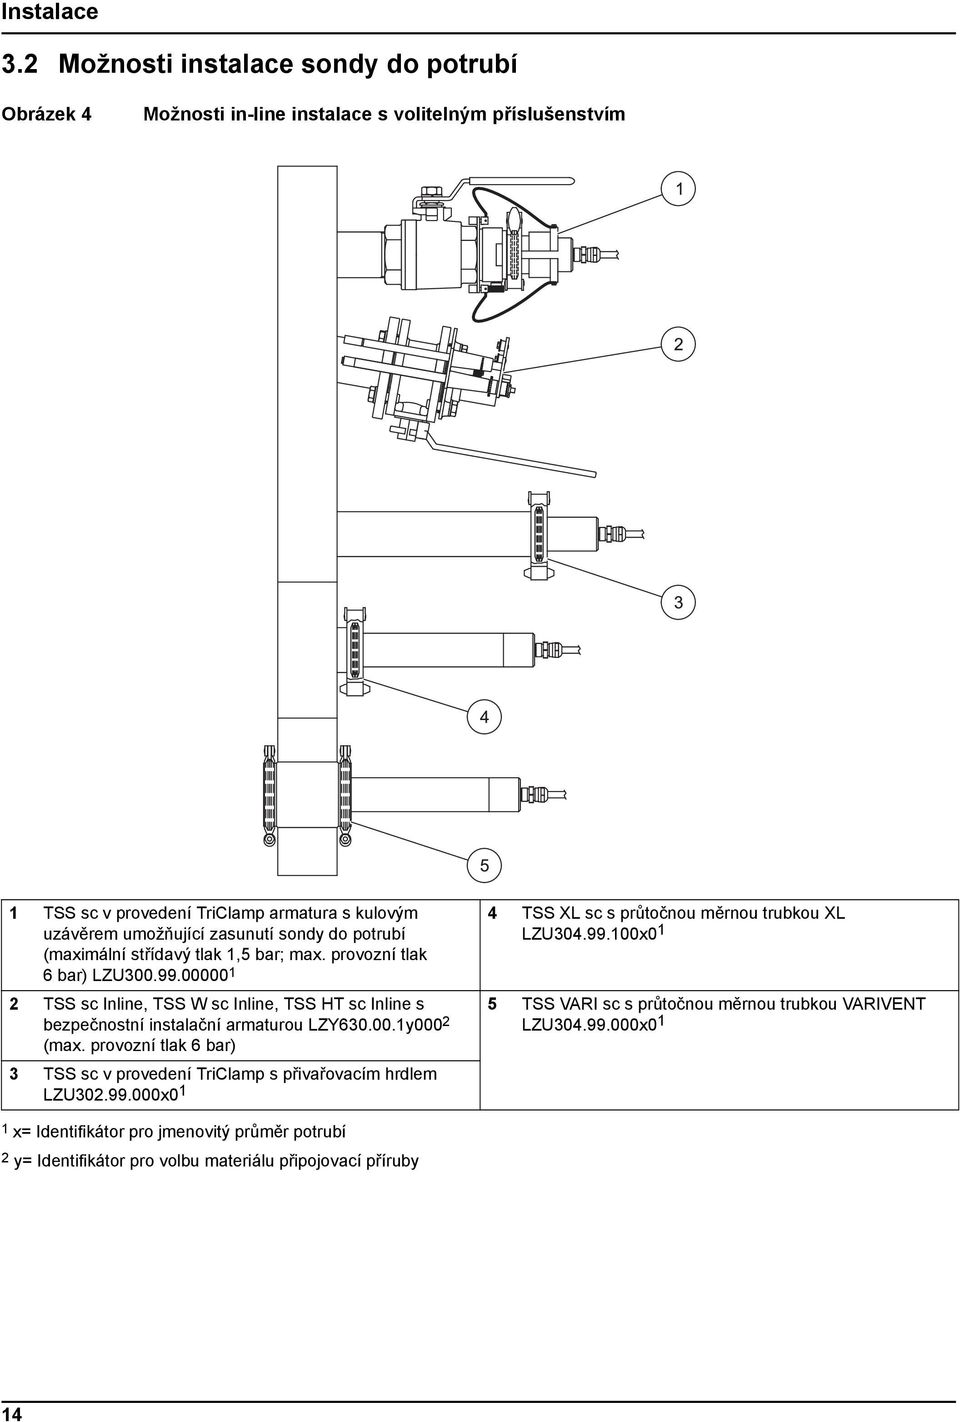 sondy do potrubí (maximální střídavý tlak 1,5 bar; max. provozní tlak 6 bar) LZU300.99.